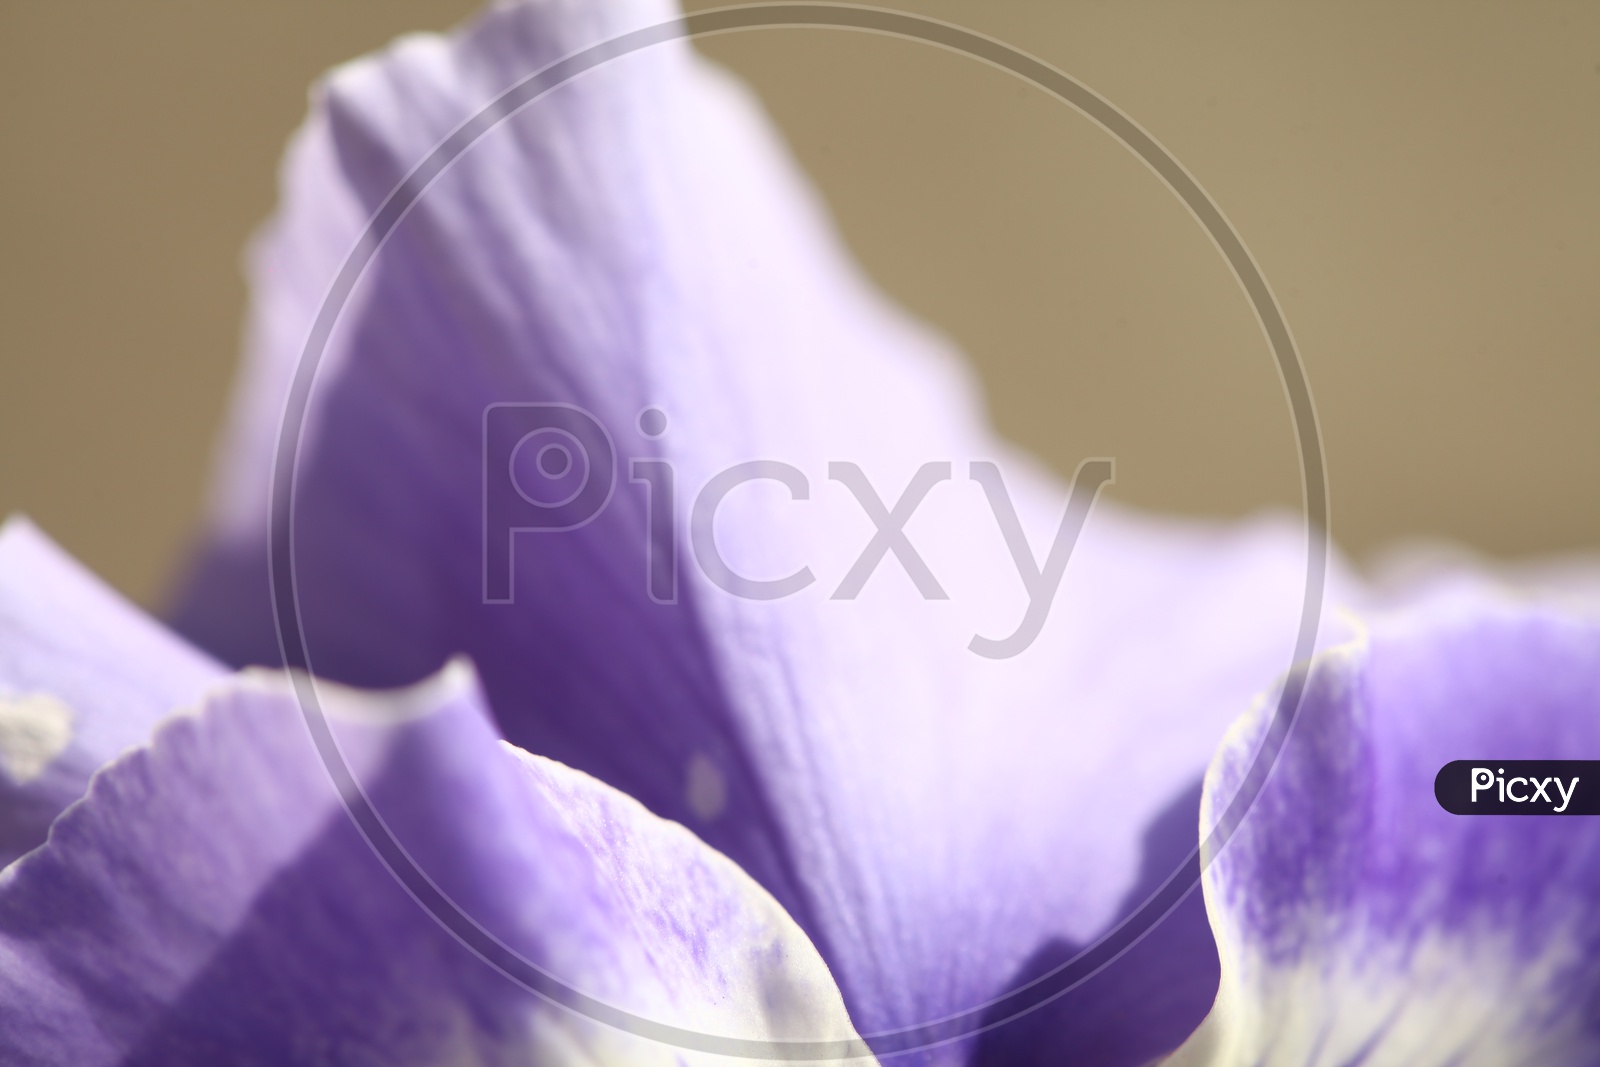 Close up of a purple flower petal